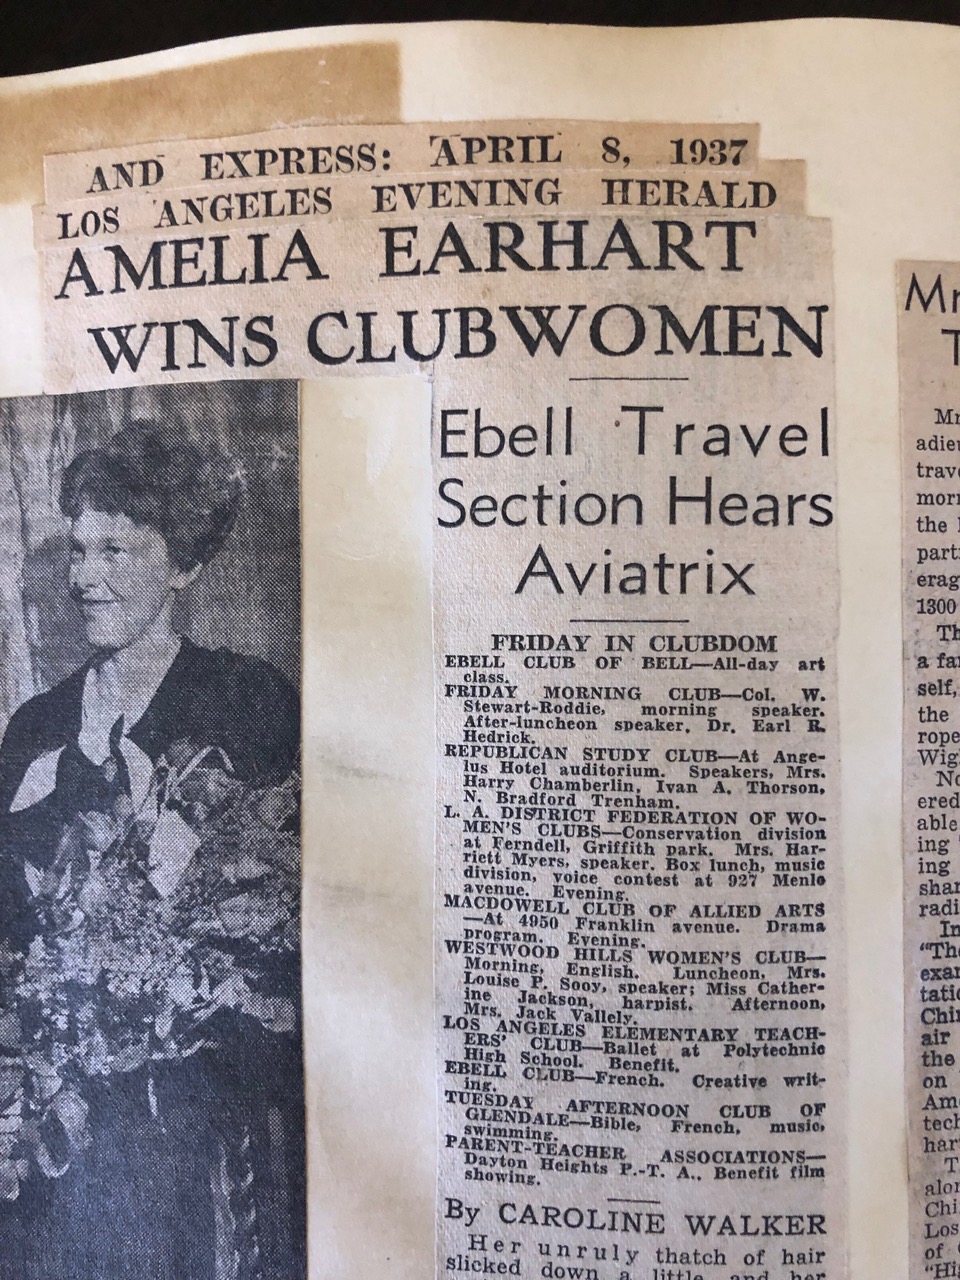 Archives. Amelia Earhart